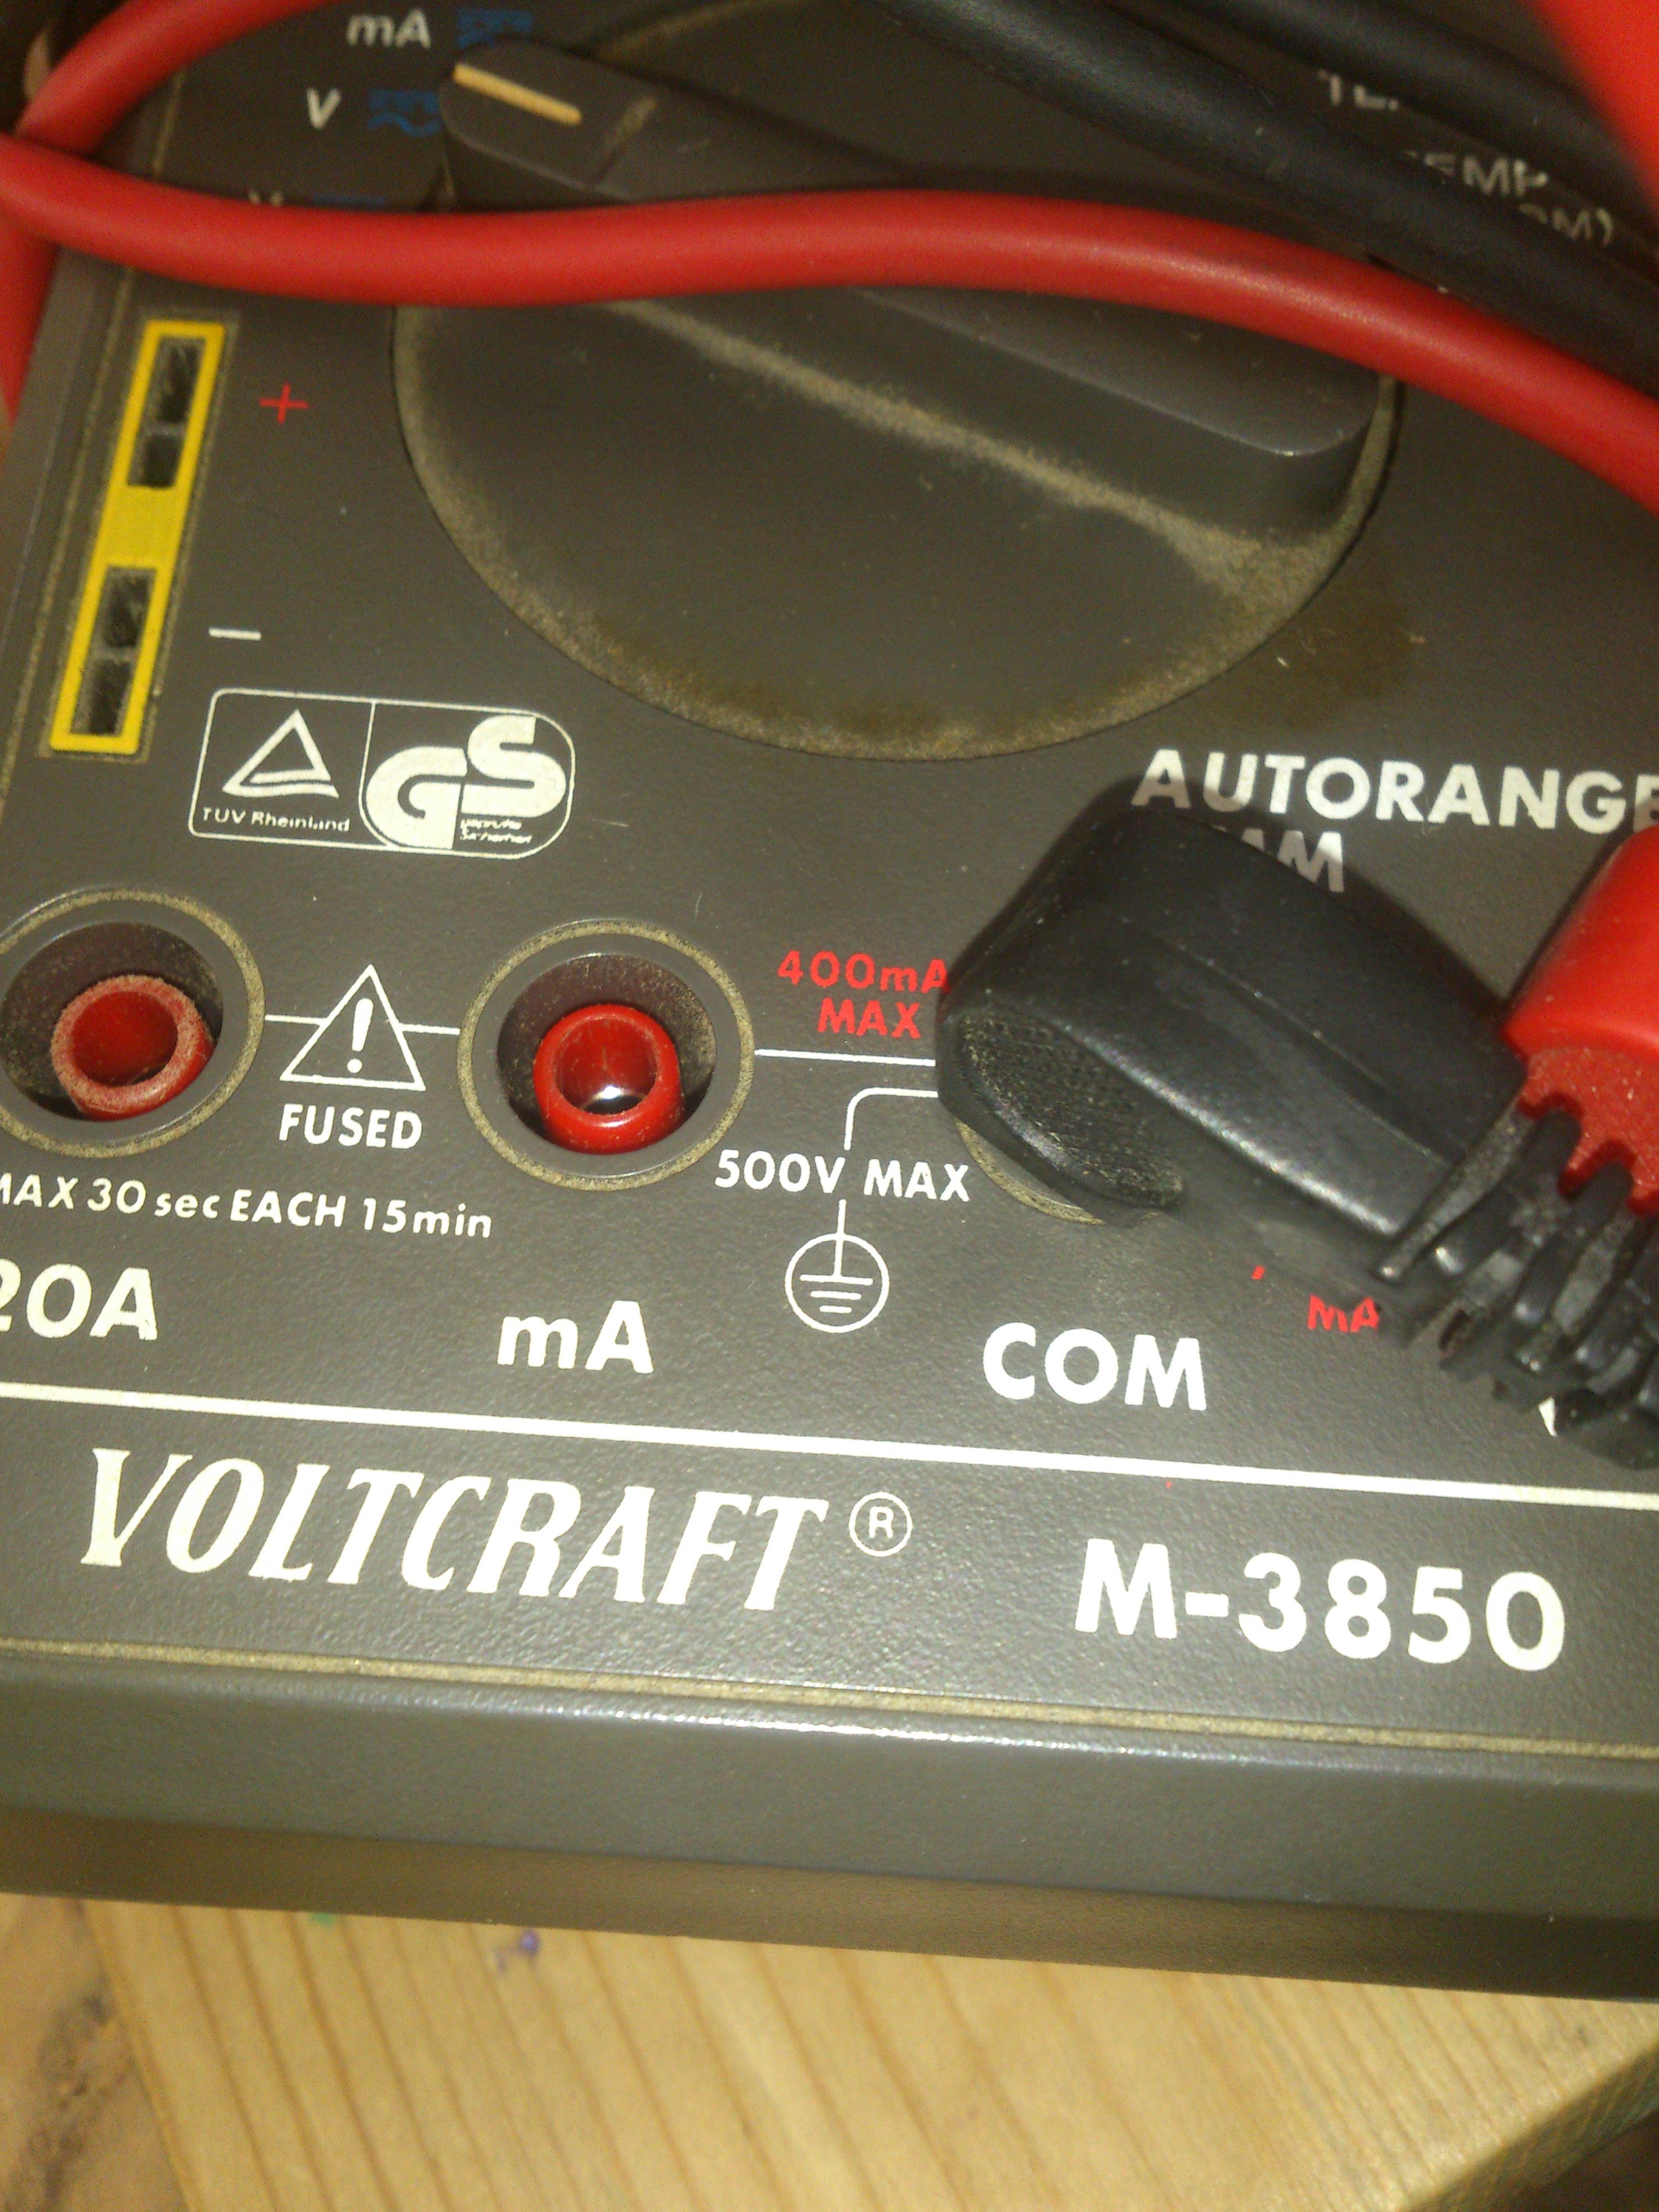 Voltcraft m 3850 manual